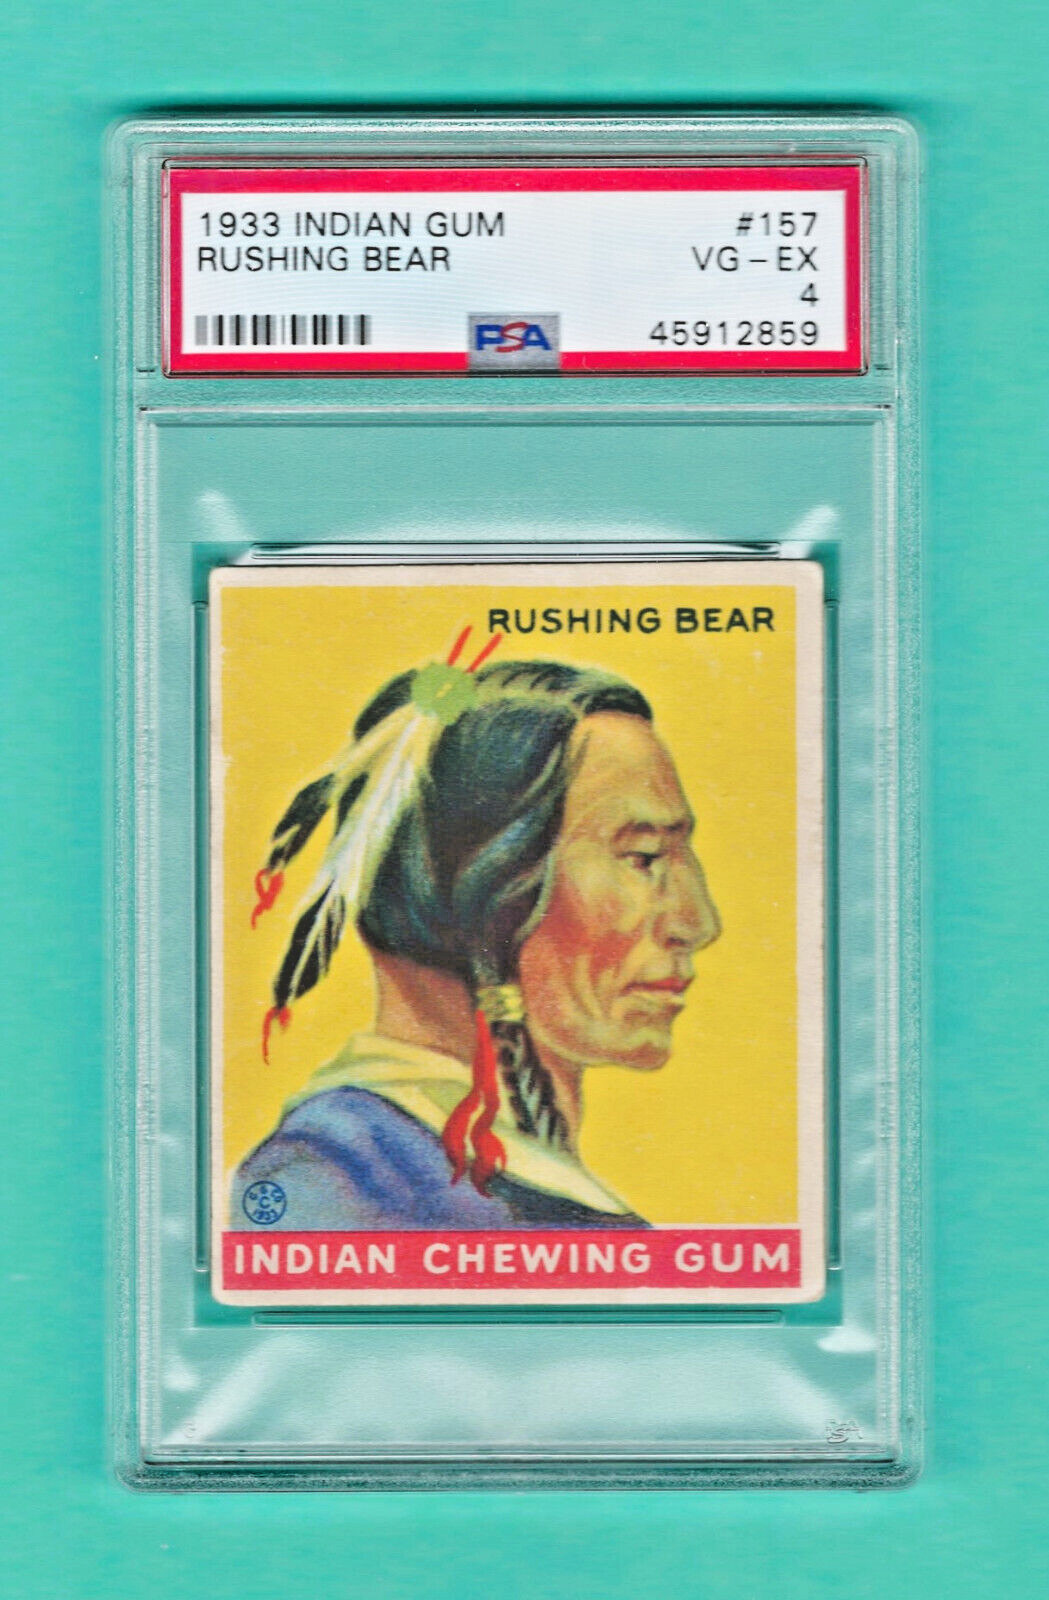 1933 R73 Goudey Indian Gum Card #157 - RUSHING BEAR - Series 216 - PSA 4 - VG-EX